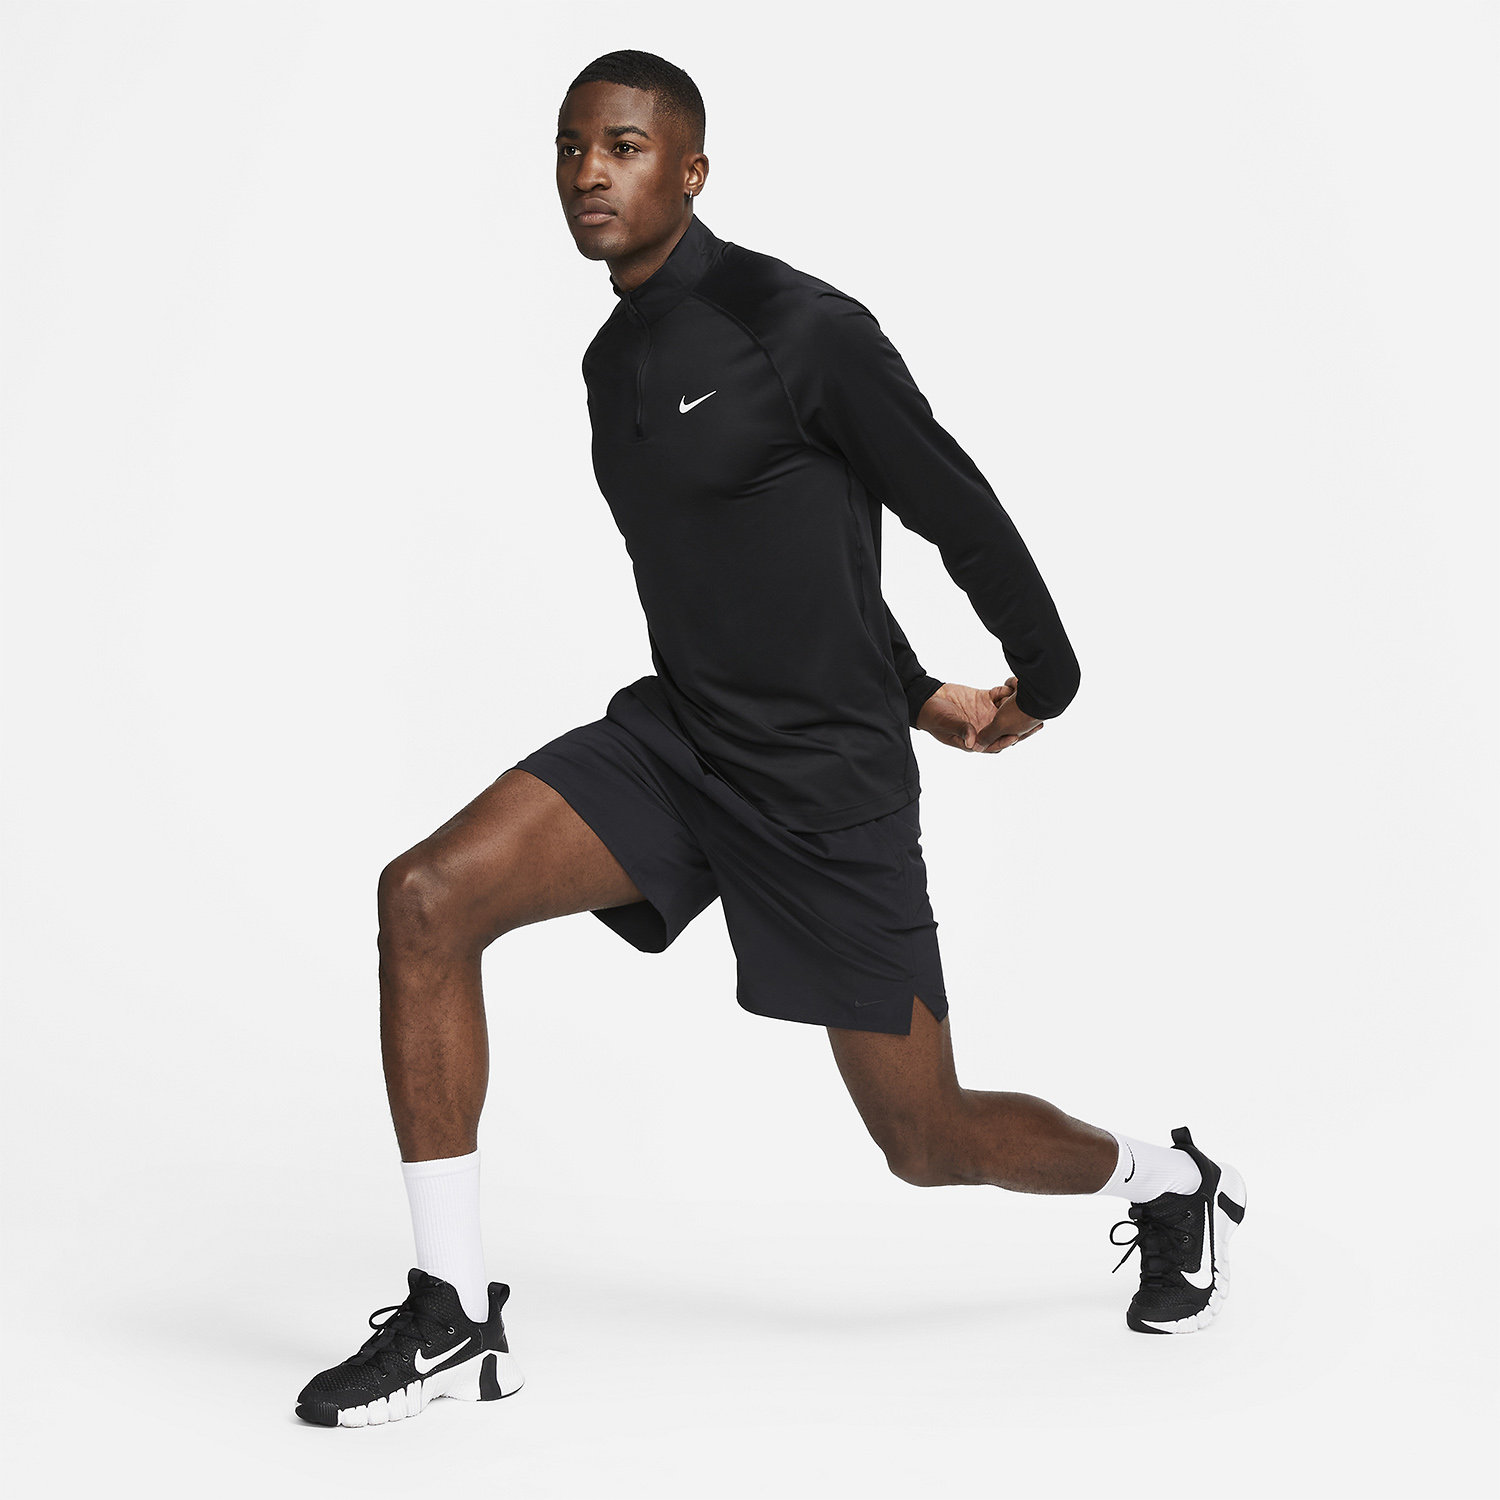 Nike Ready Shirt - Black/White